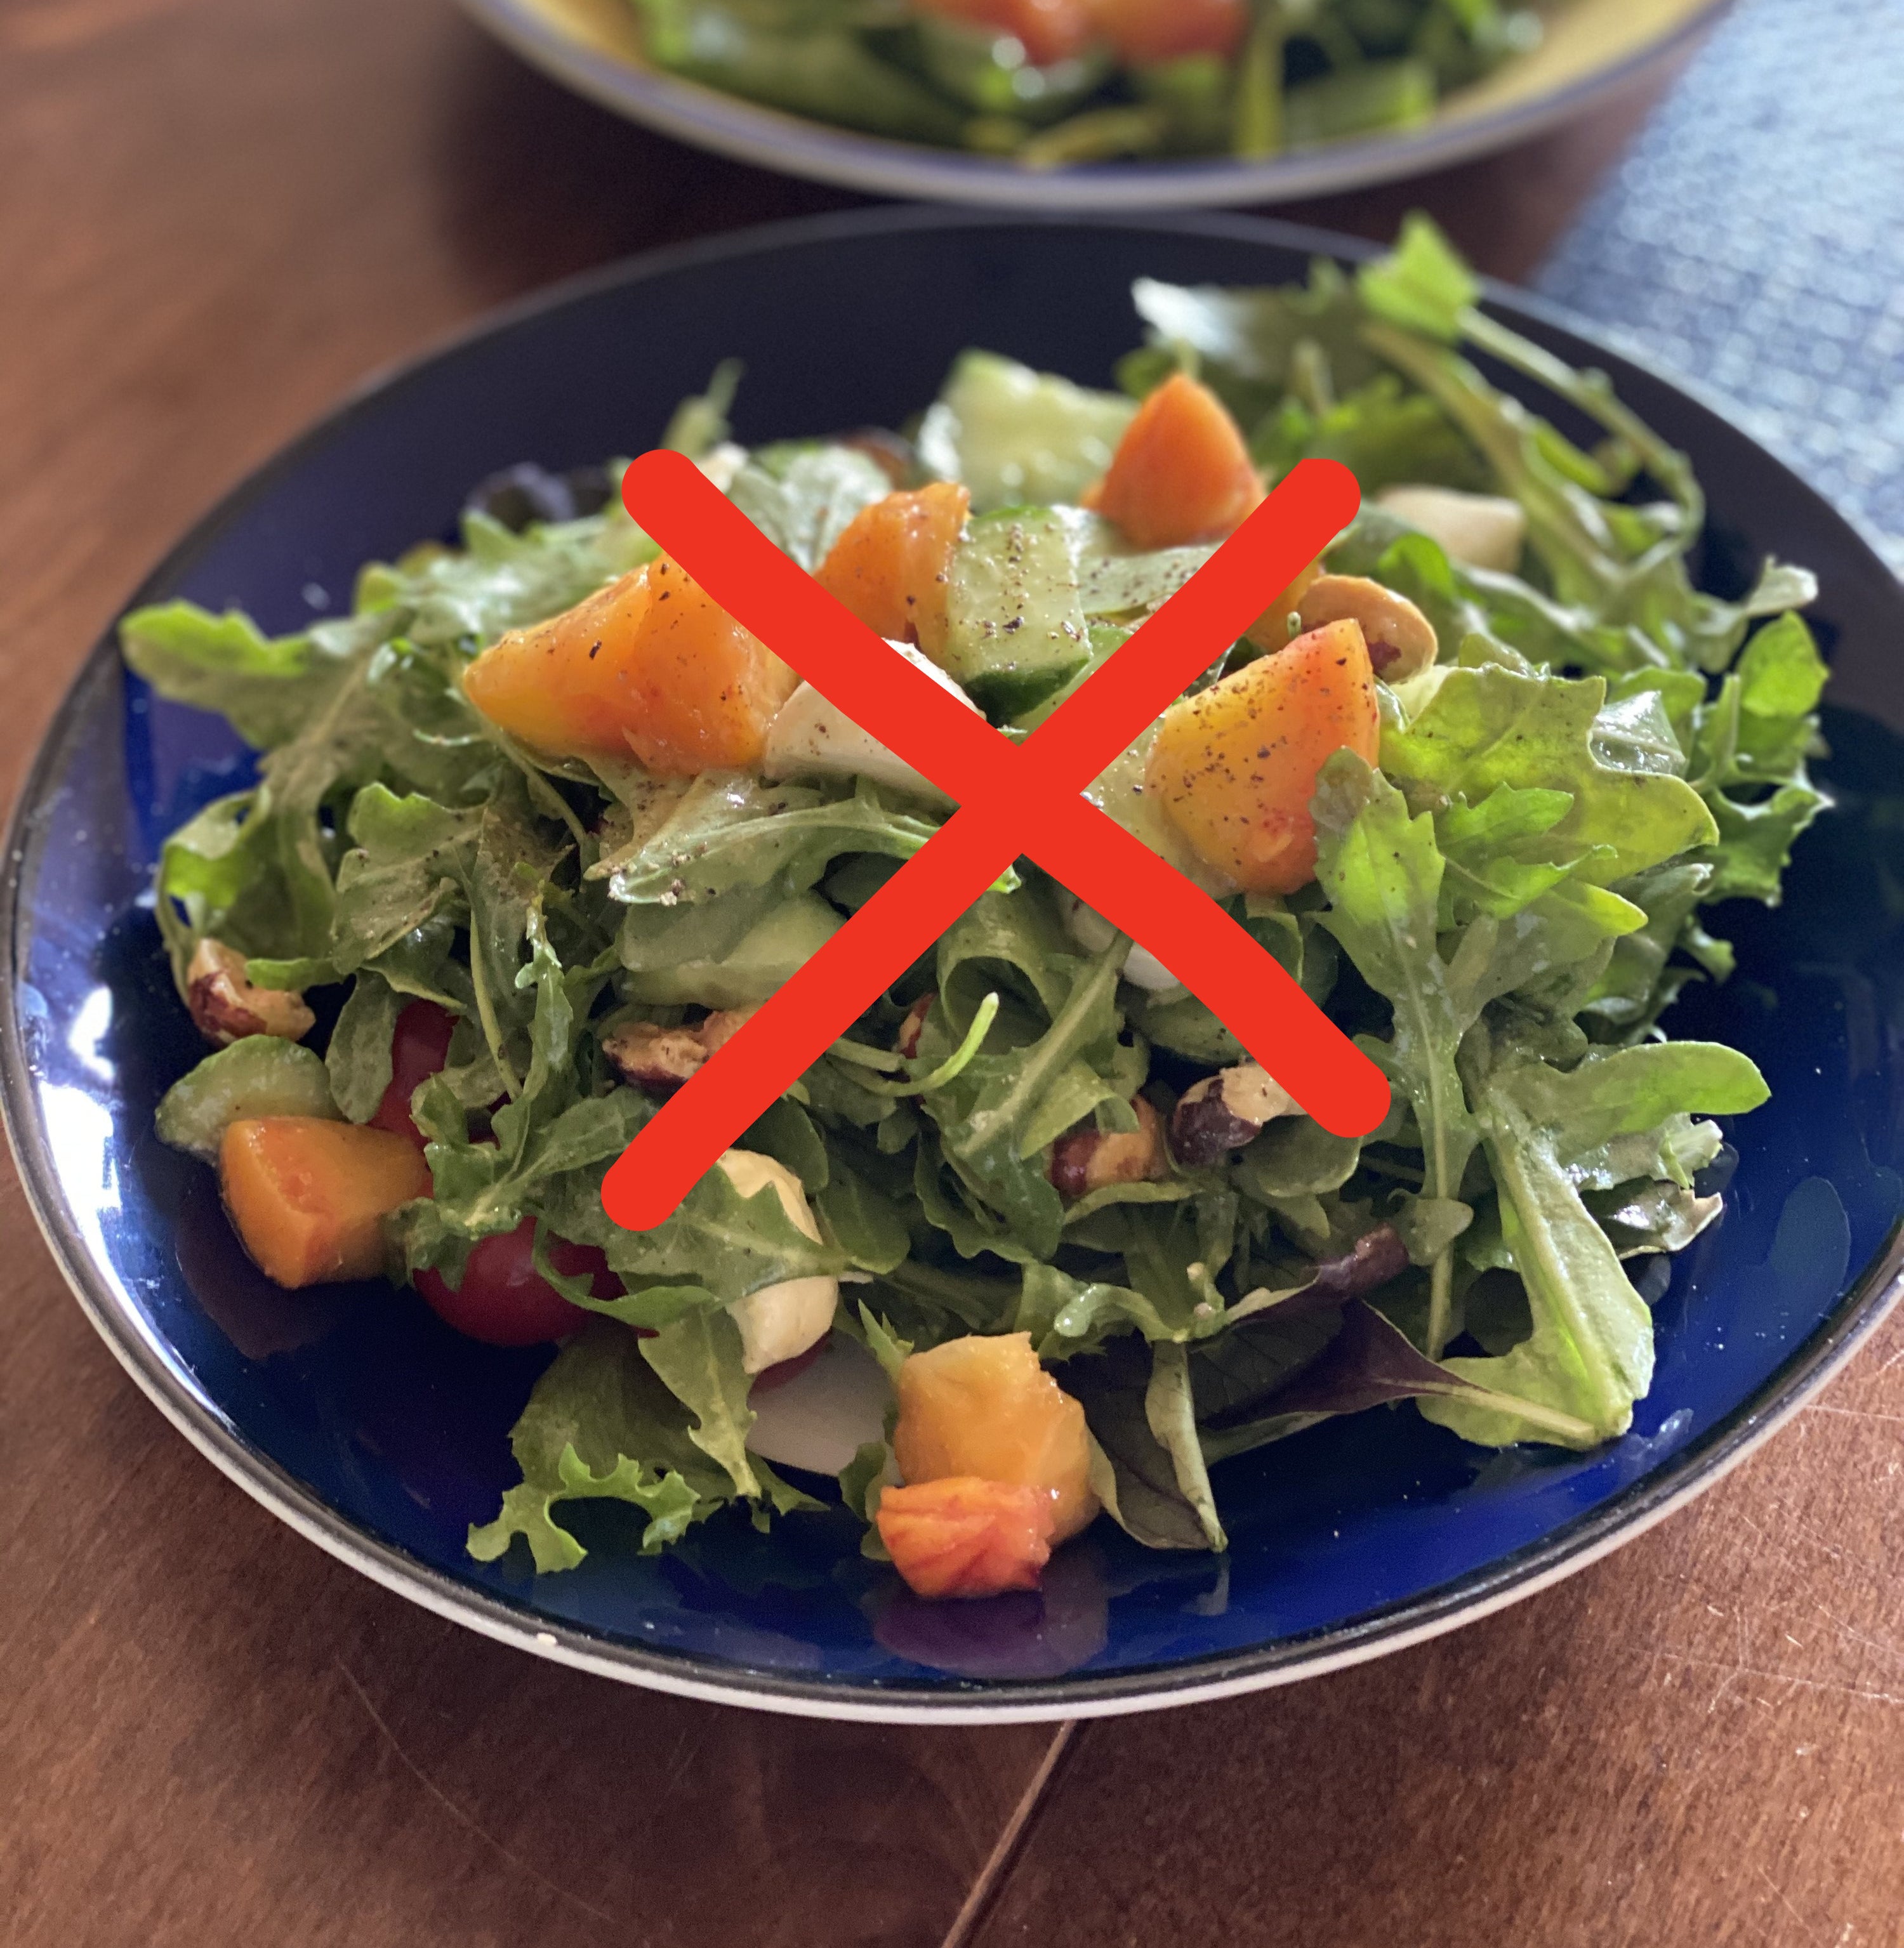 Arugula salad with an X through it